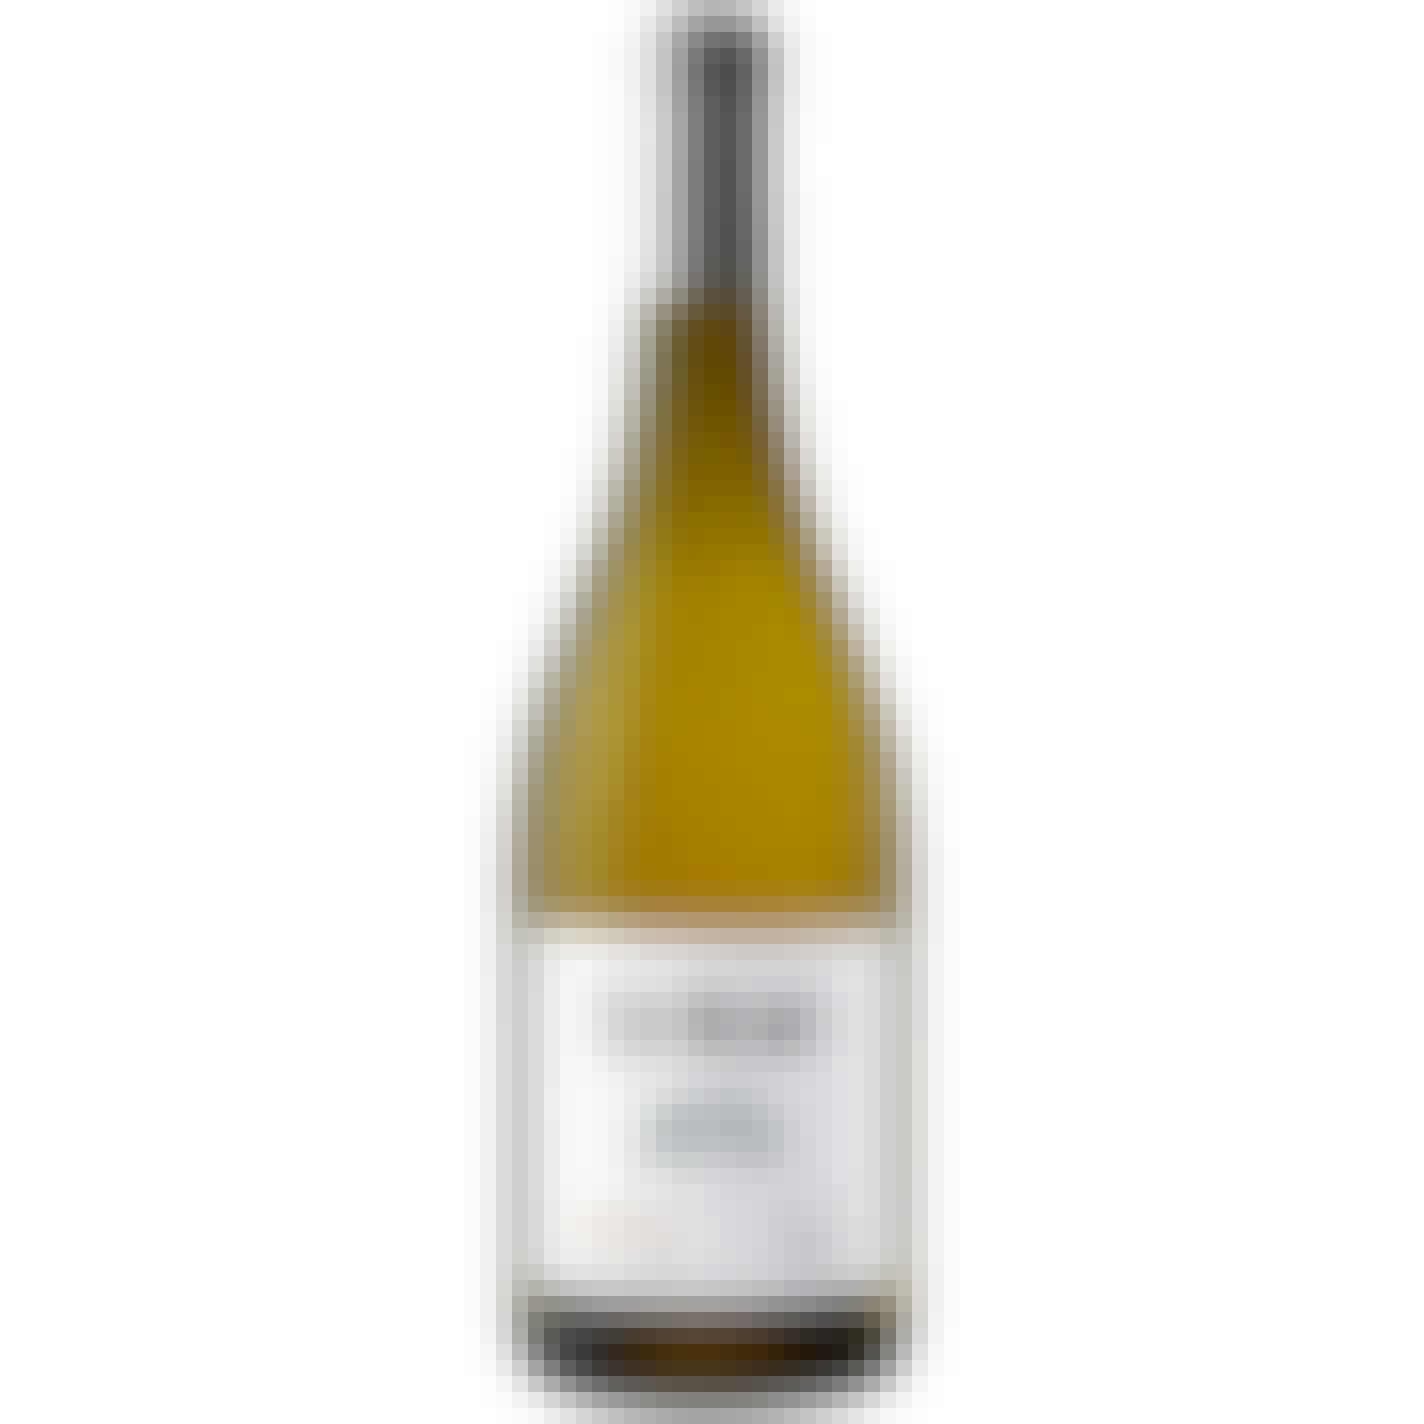 Ca' Momi Chardonnay 2019 750ml